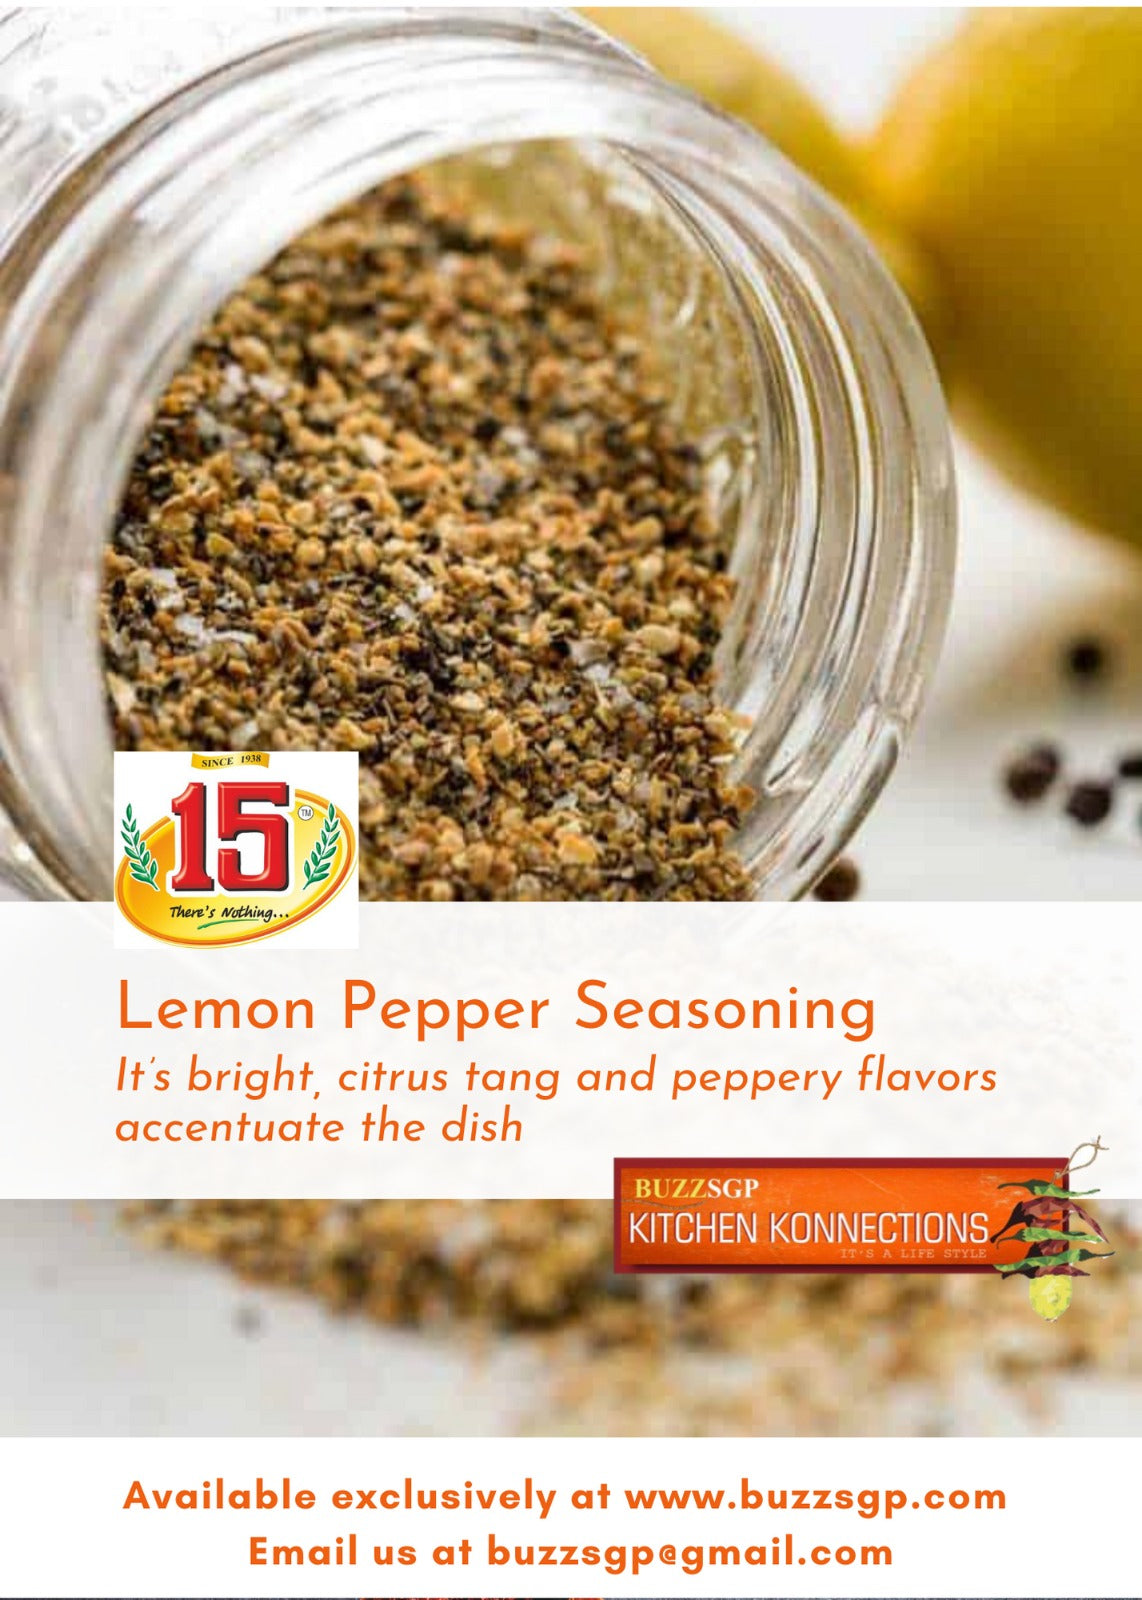 Buzzsgp Kitchen Konnections Lemon Pepper Seasoning - 100 g